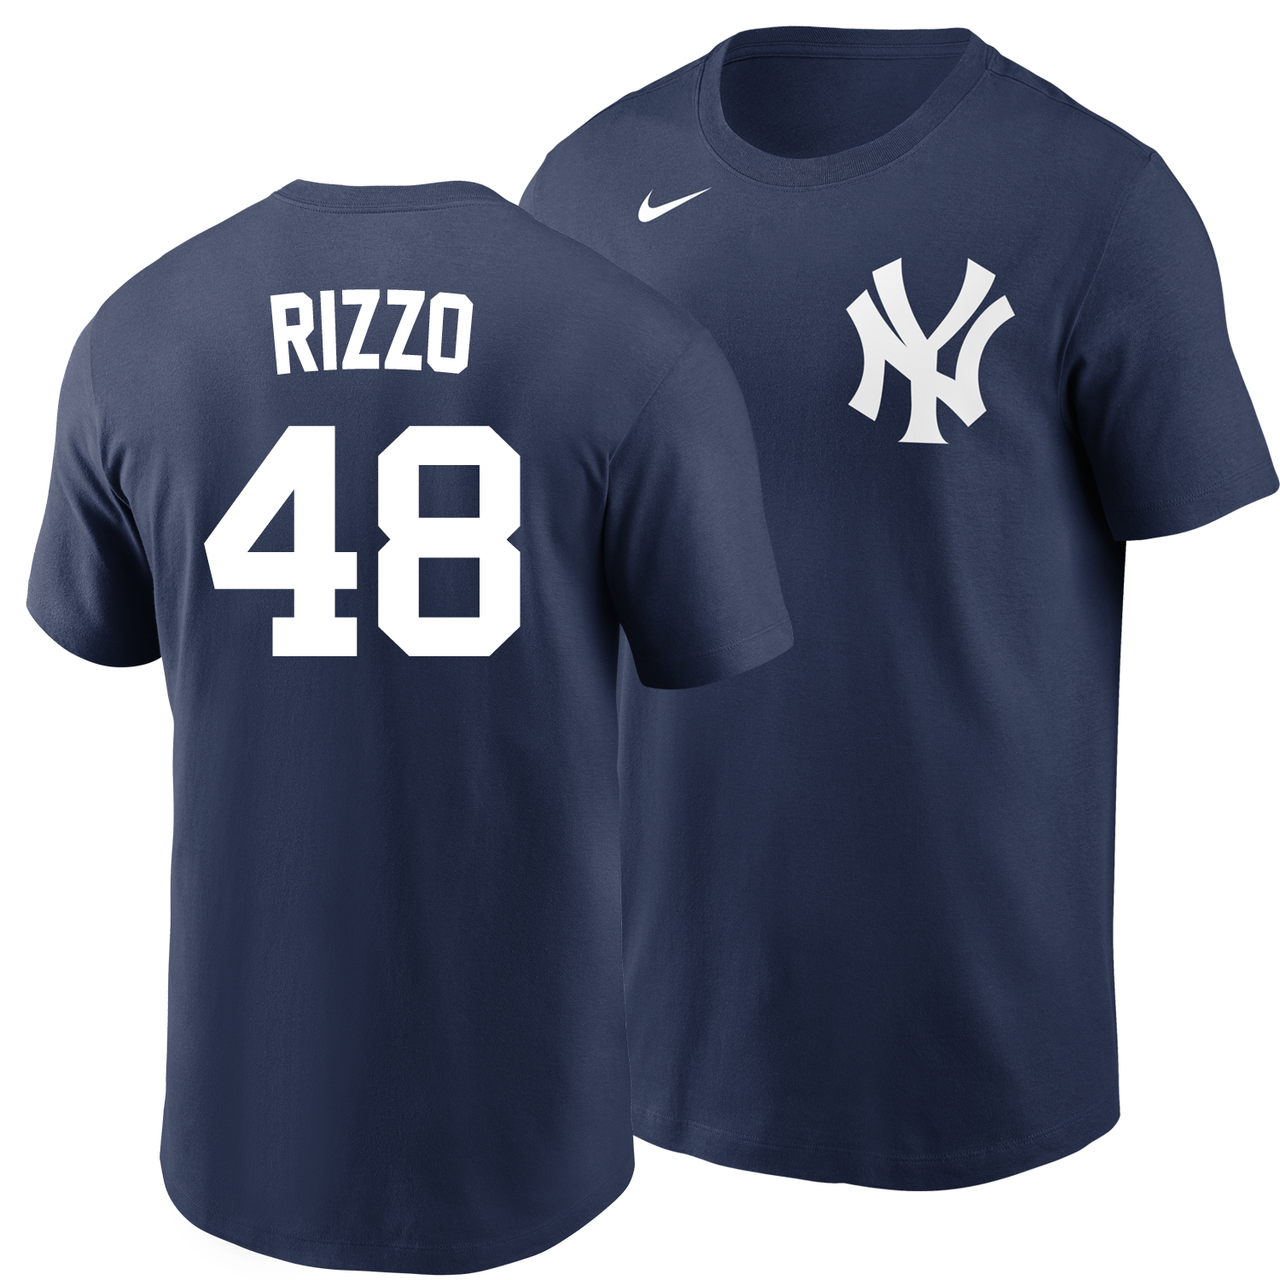 Anthony Rizzo T-Shirt - Navy NY Yankees Adult T-Shirt